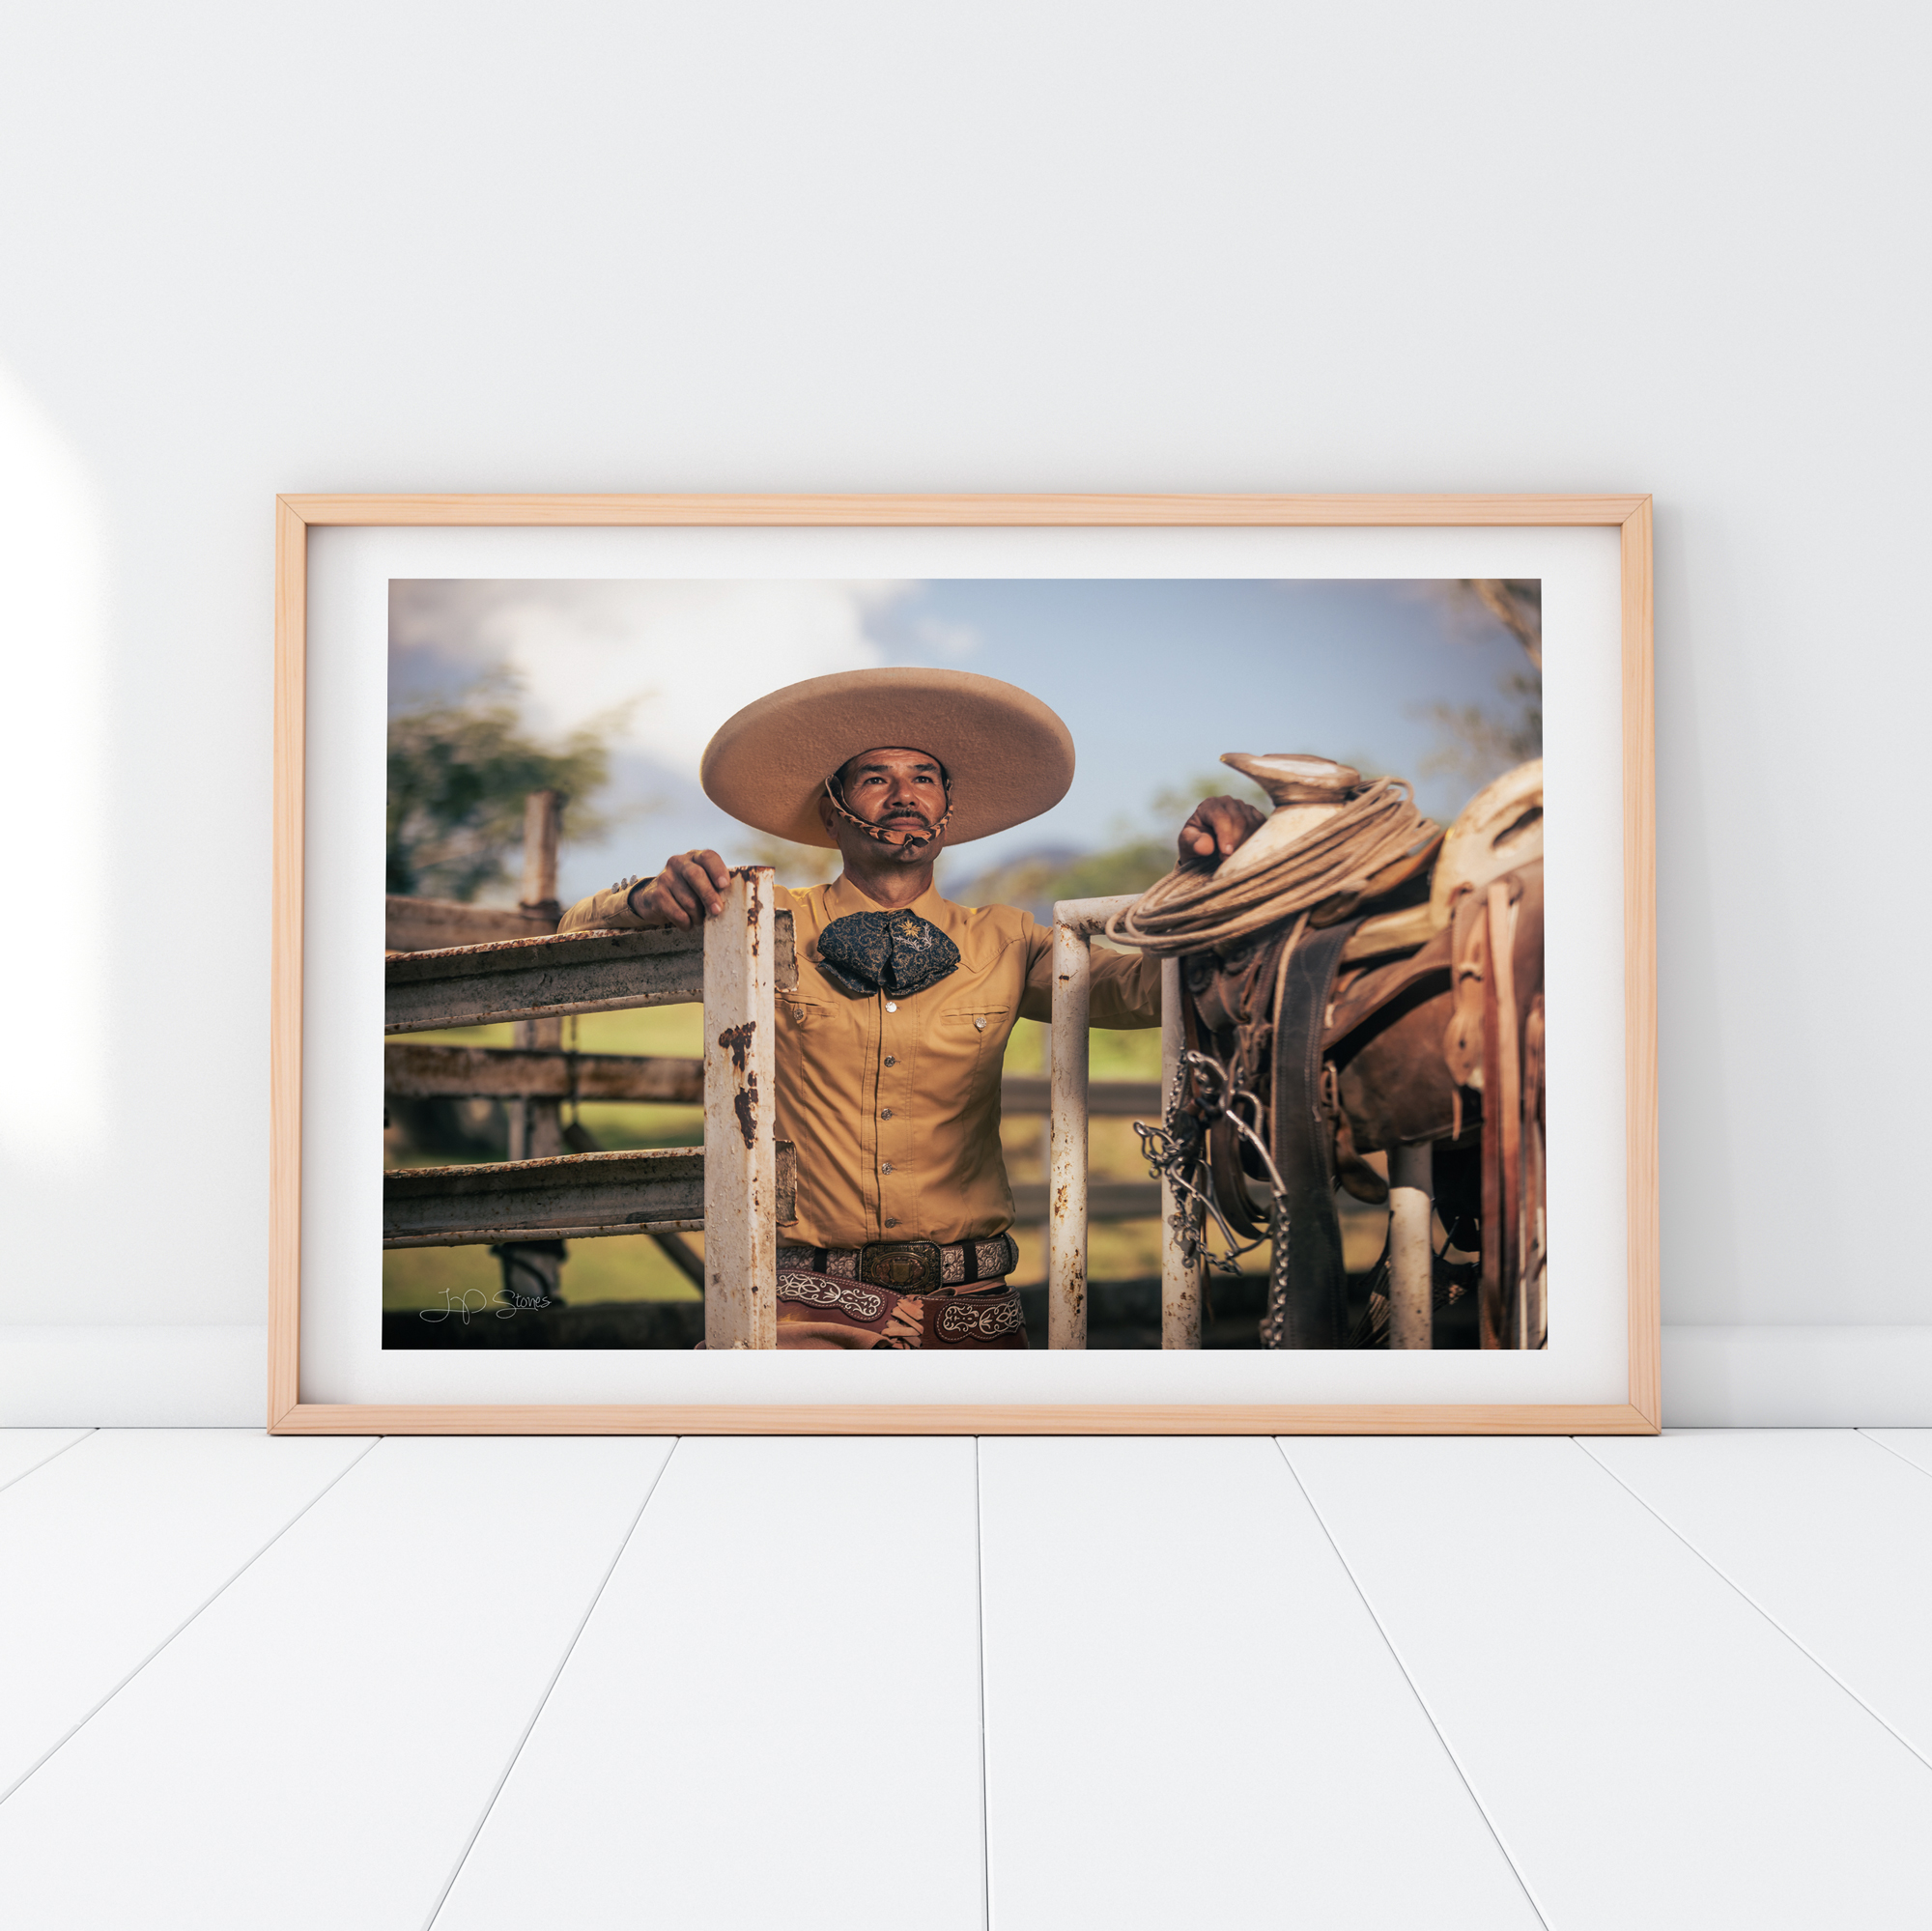 Mexican Charro with Lasso. Wall Art. Cultural Portrait. Fine Art Photography Print.